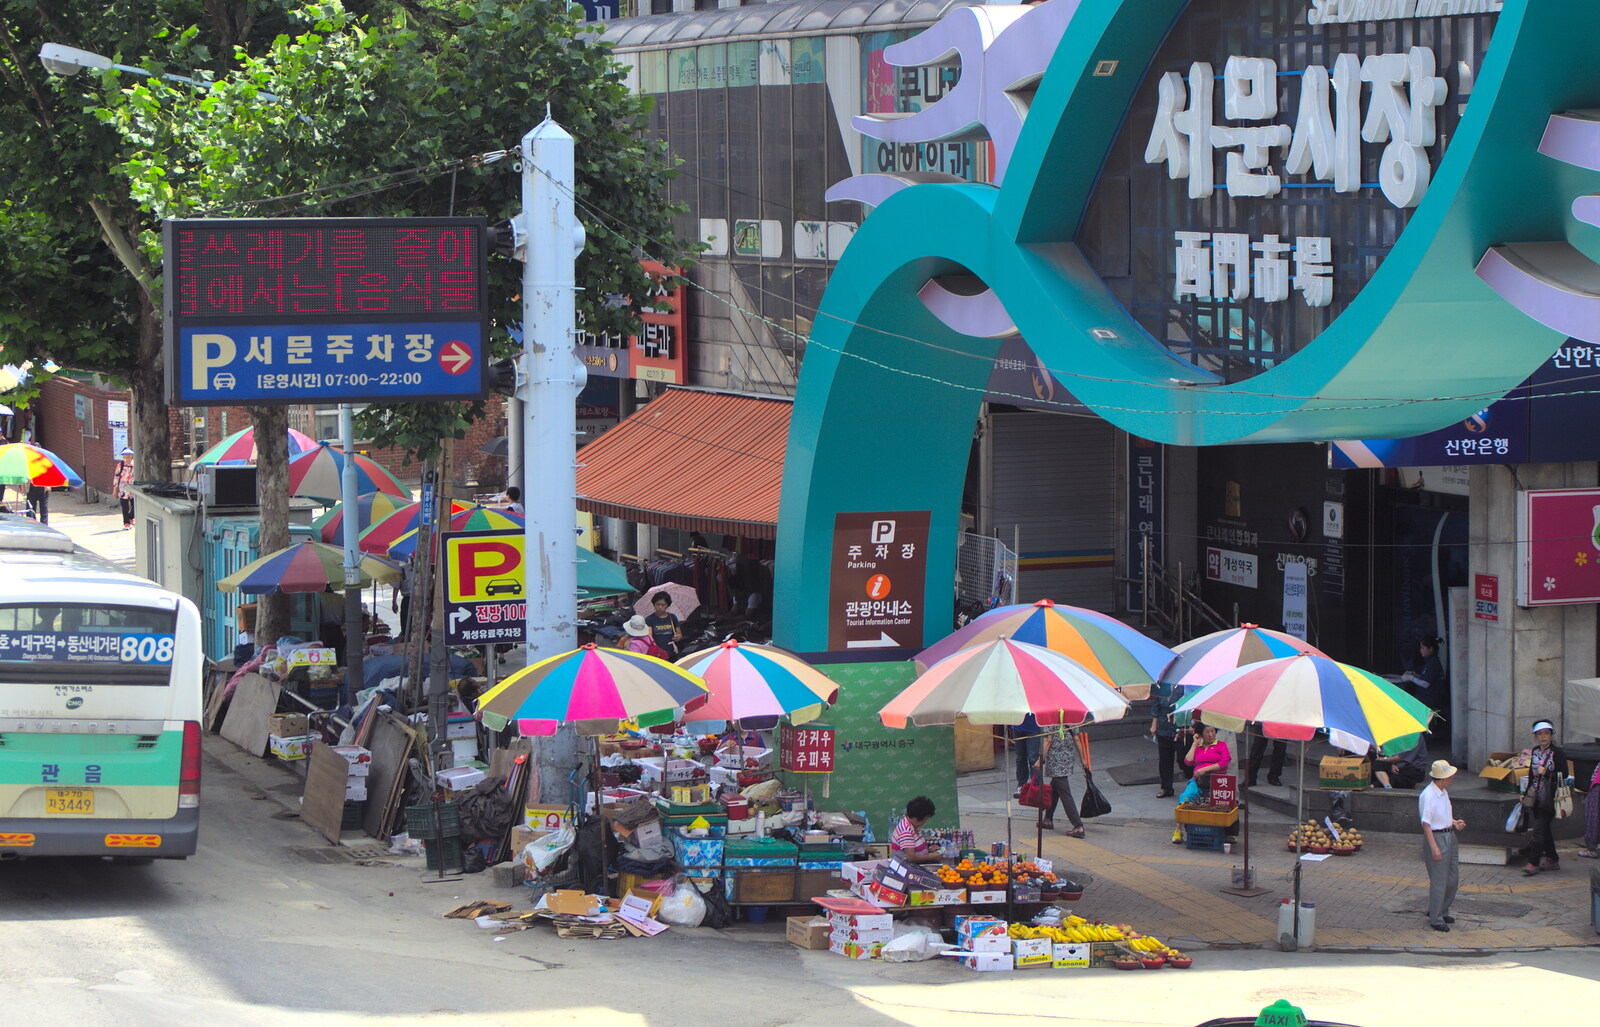 The entrance to the market from Seomun Market, Daegu, South Korea - 1st July 2012